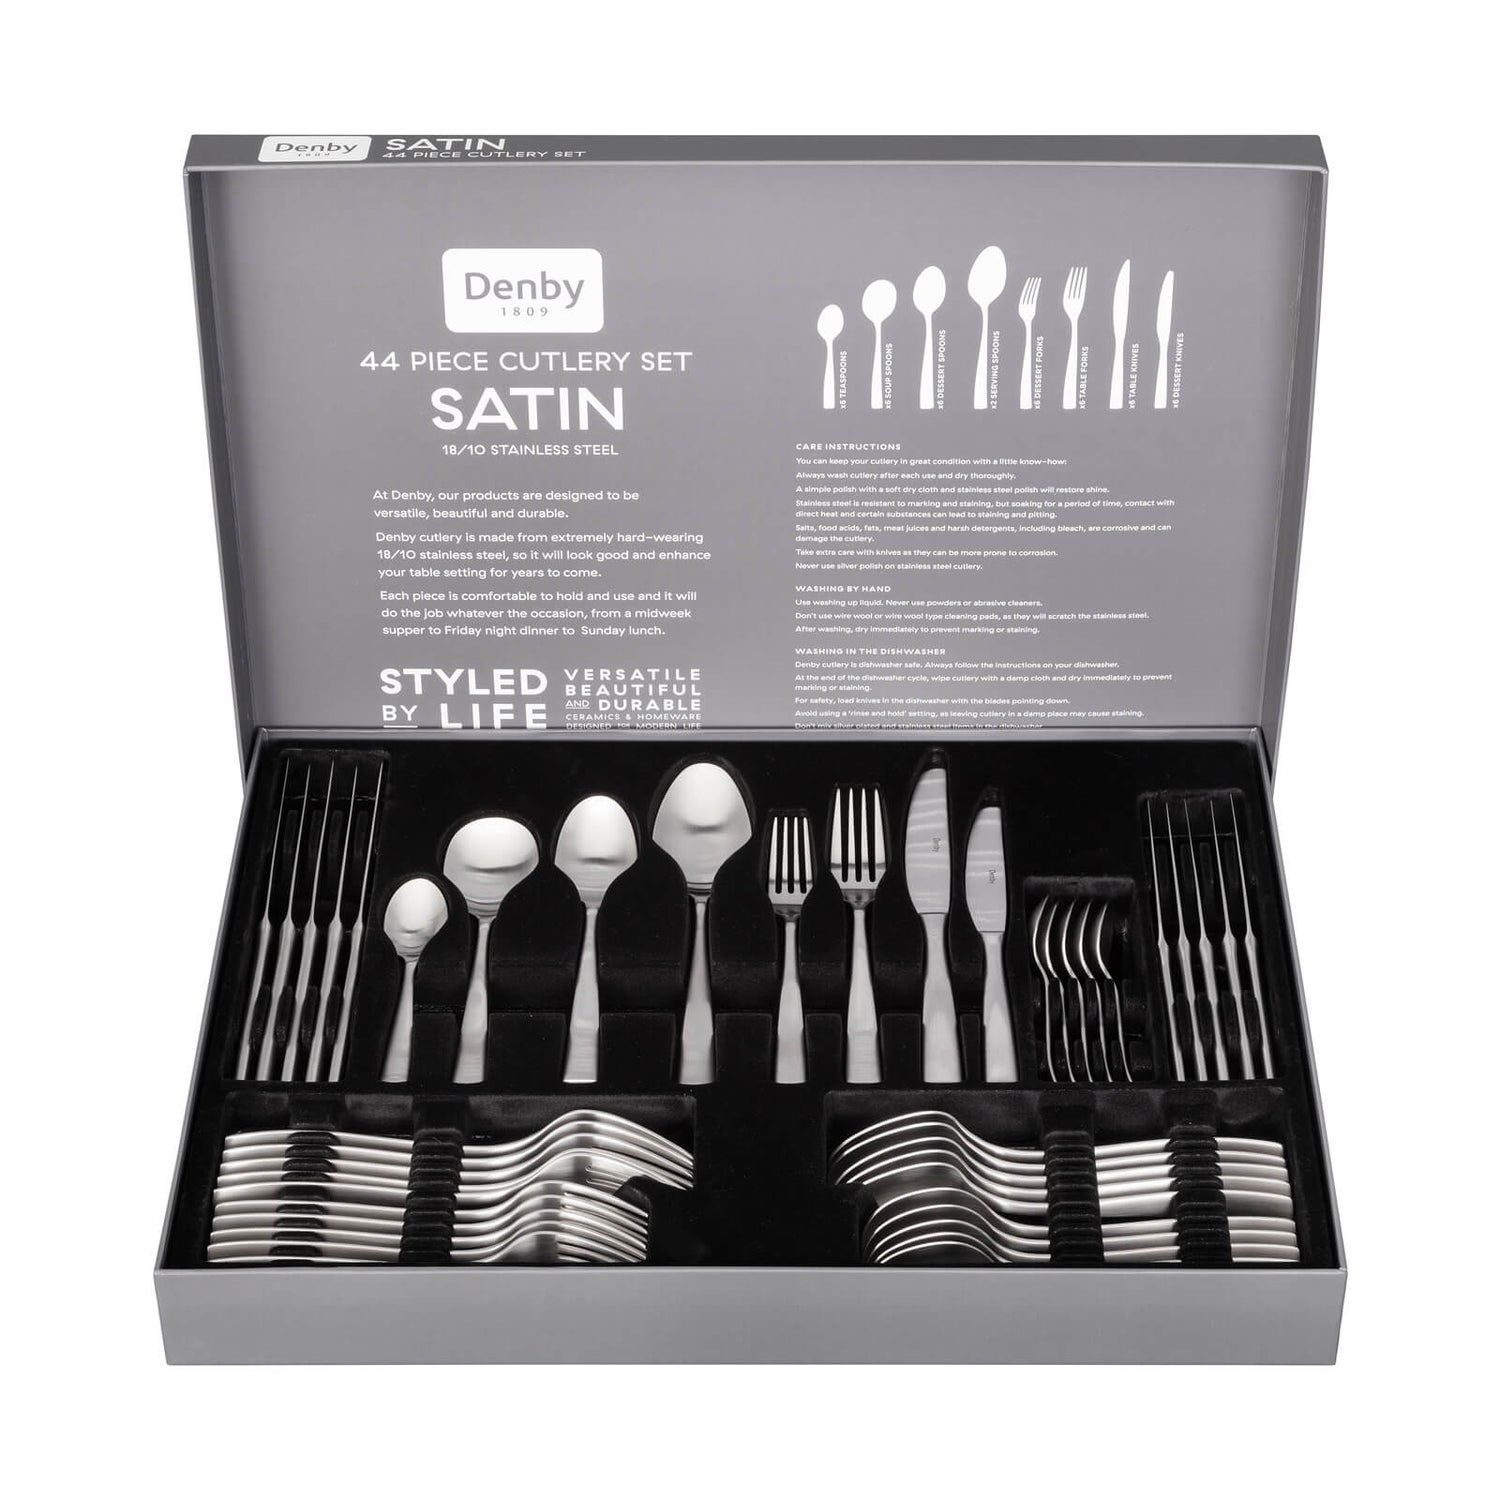 Denby cutlery set